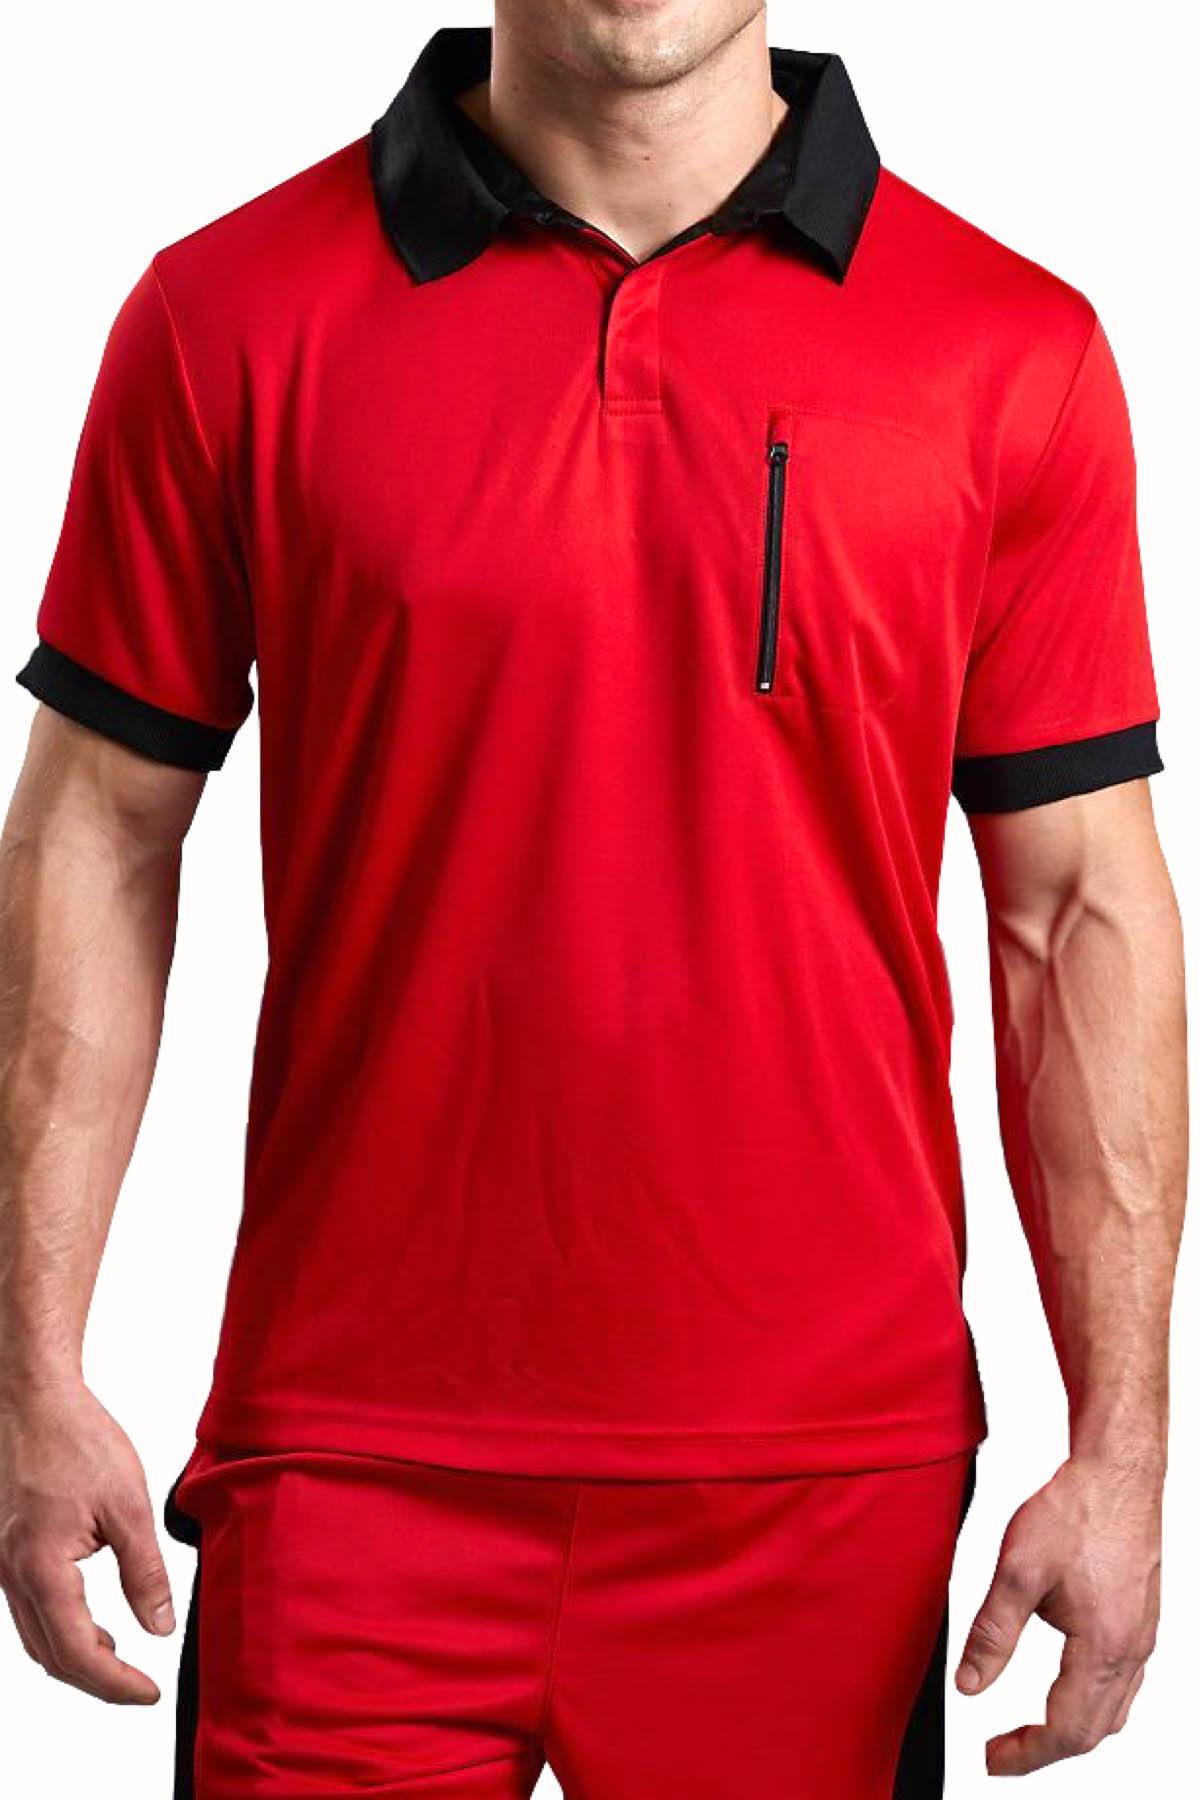 Body Tech Red/Black Motion Polo Shirt